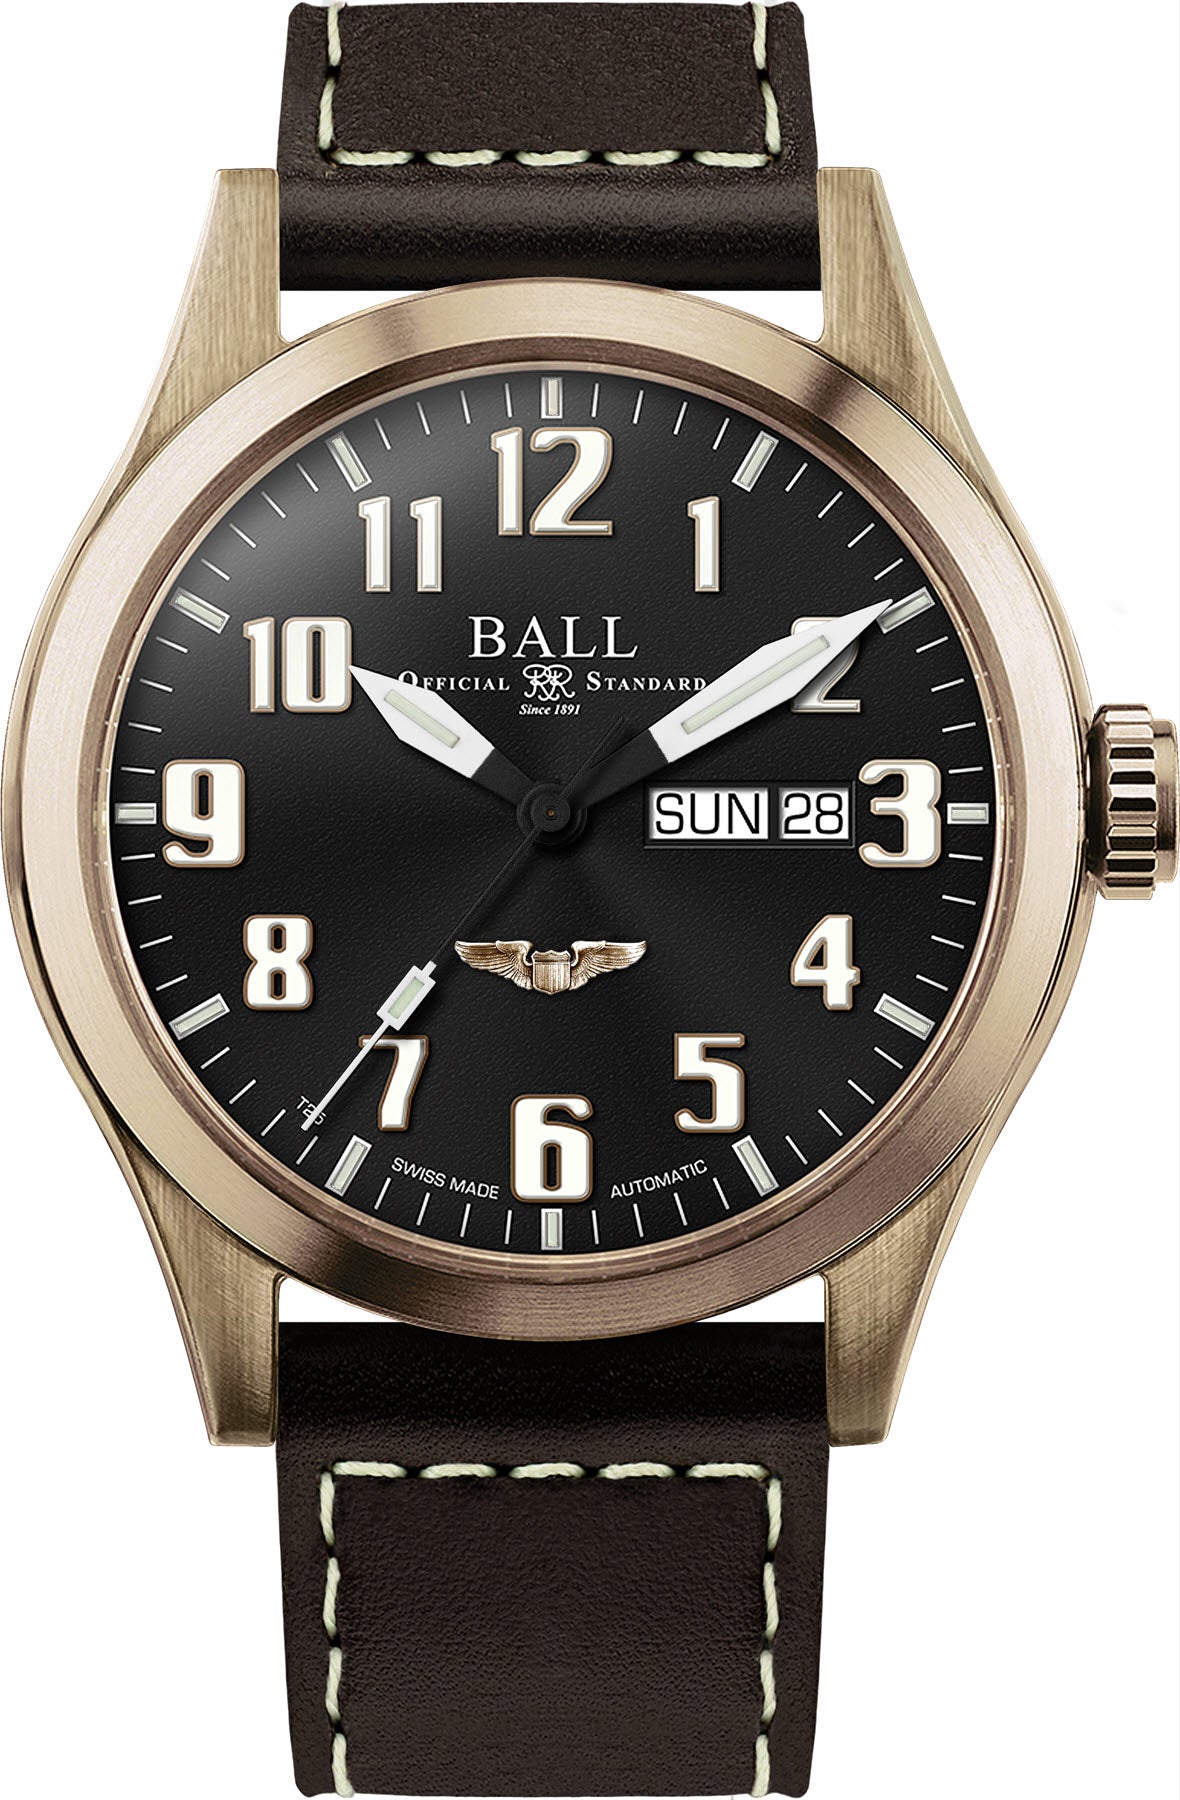 Ball Watch Company Engineer Iii Bronze Star Limited Edition